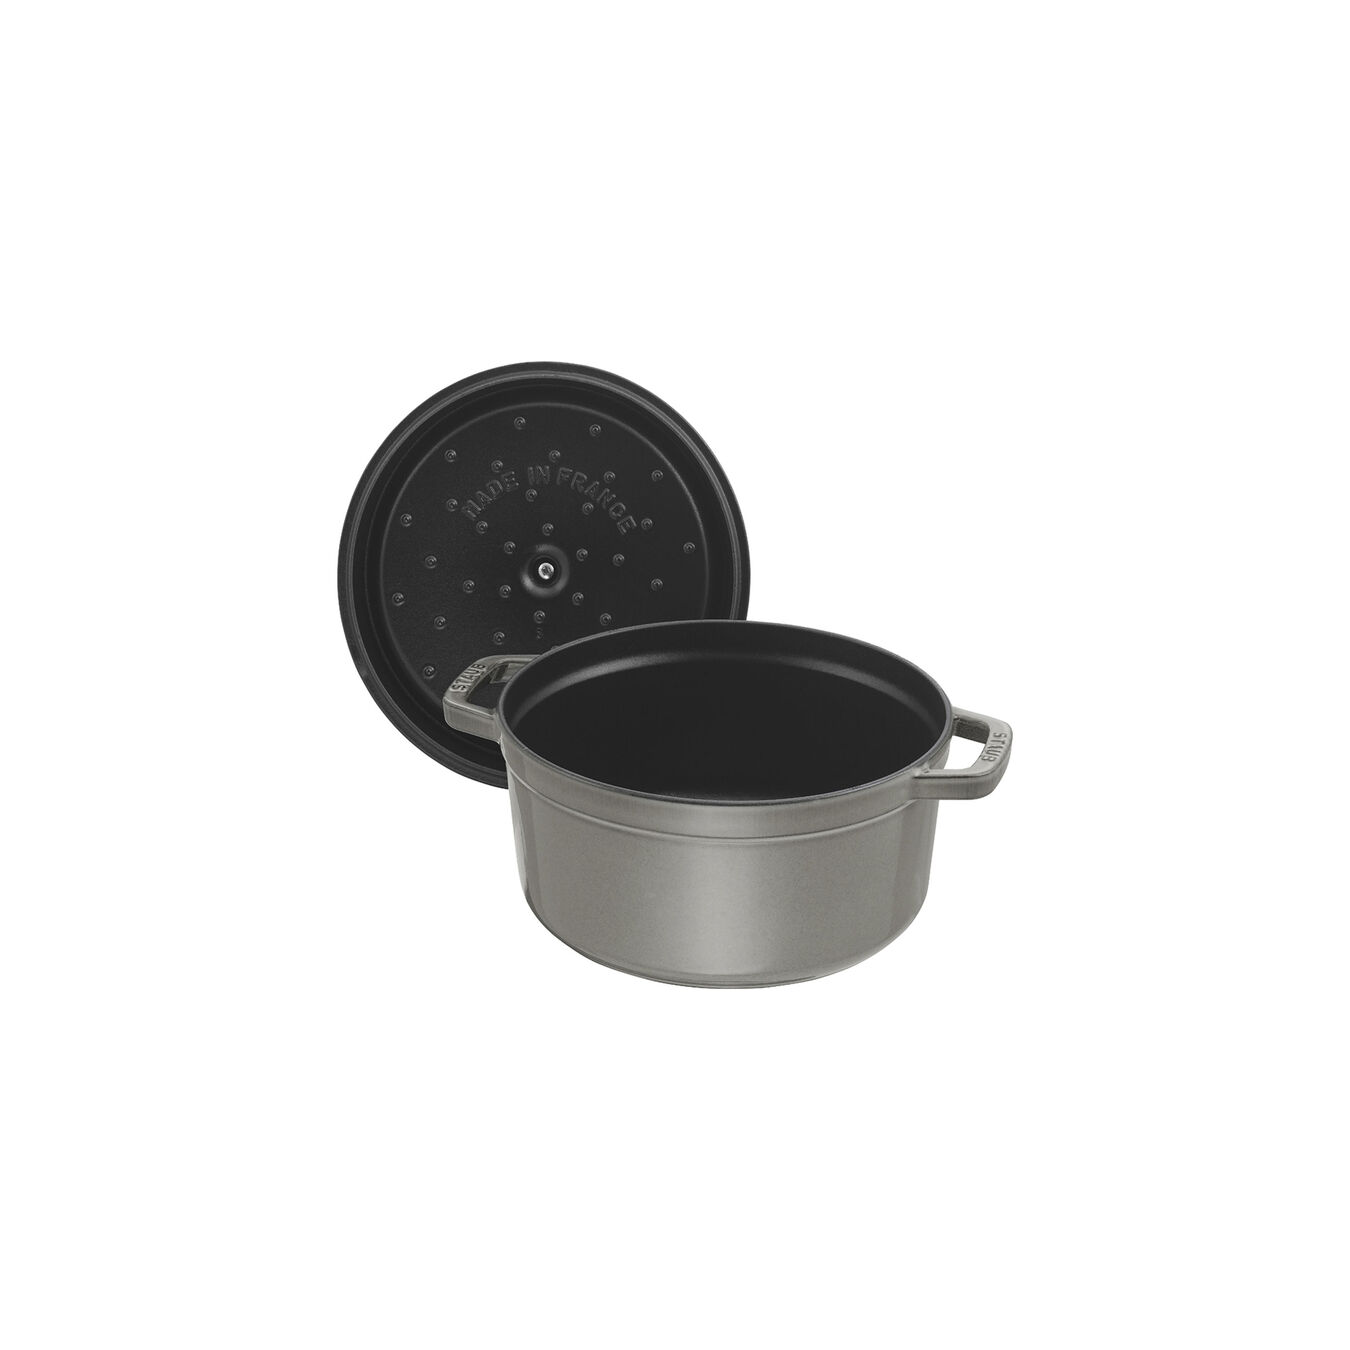 16 cm round Cast iron Cocotte graphite-grey,,large 2